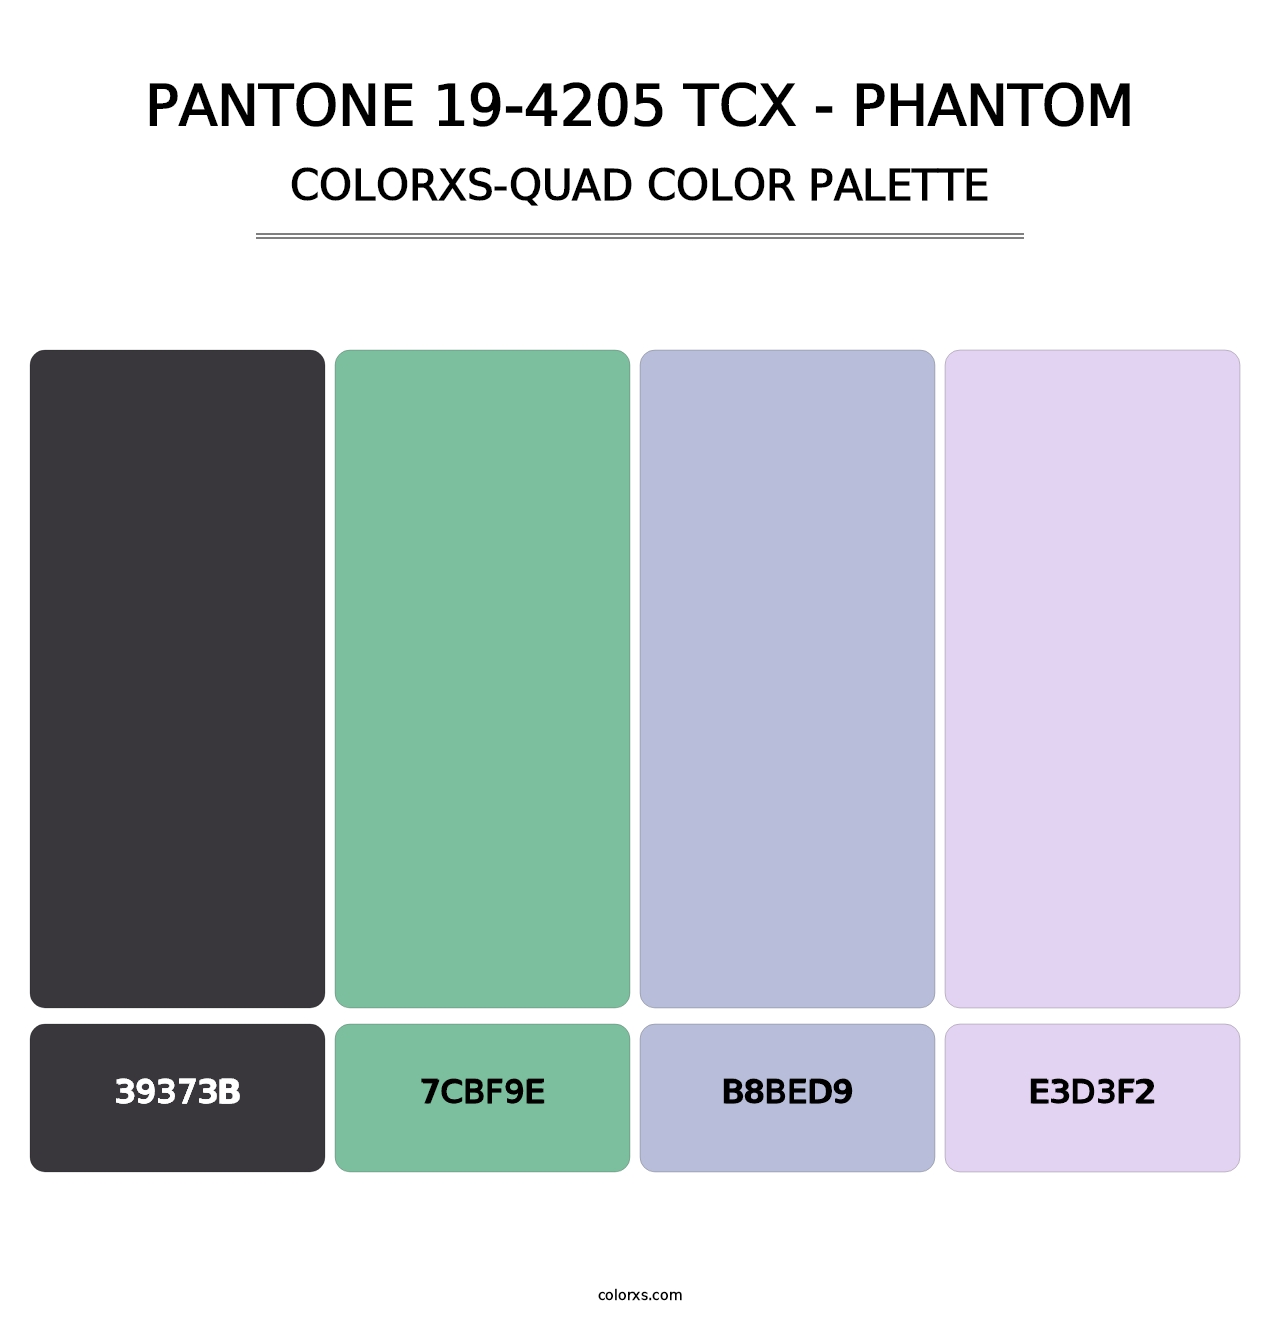 PANTONE 19-4205 TCX - Phantom - Colorxs Quad Palette